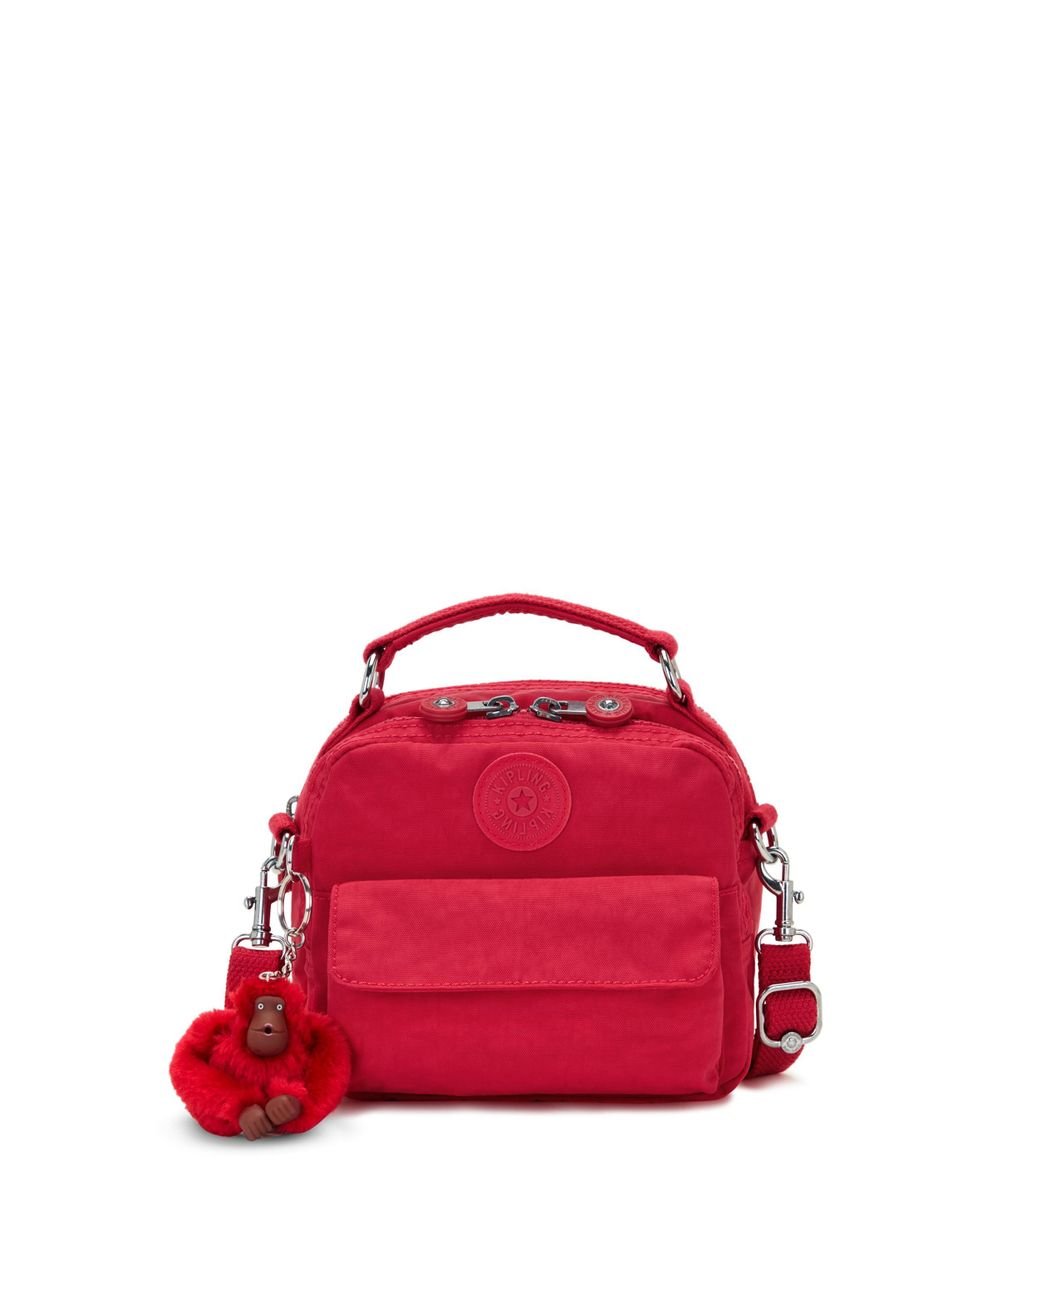 Kipling Puck Small Shoulder Bag in Red | Lyst